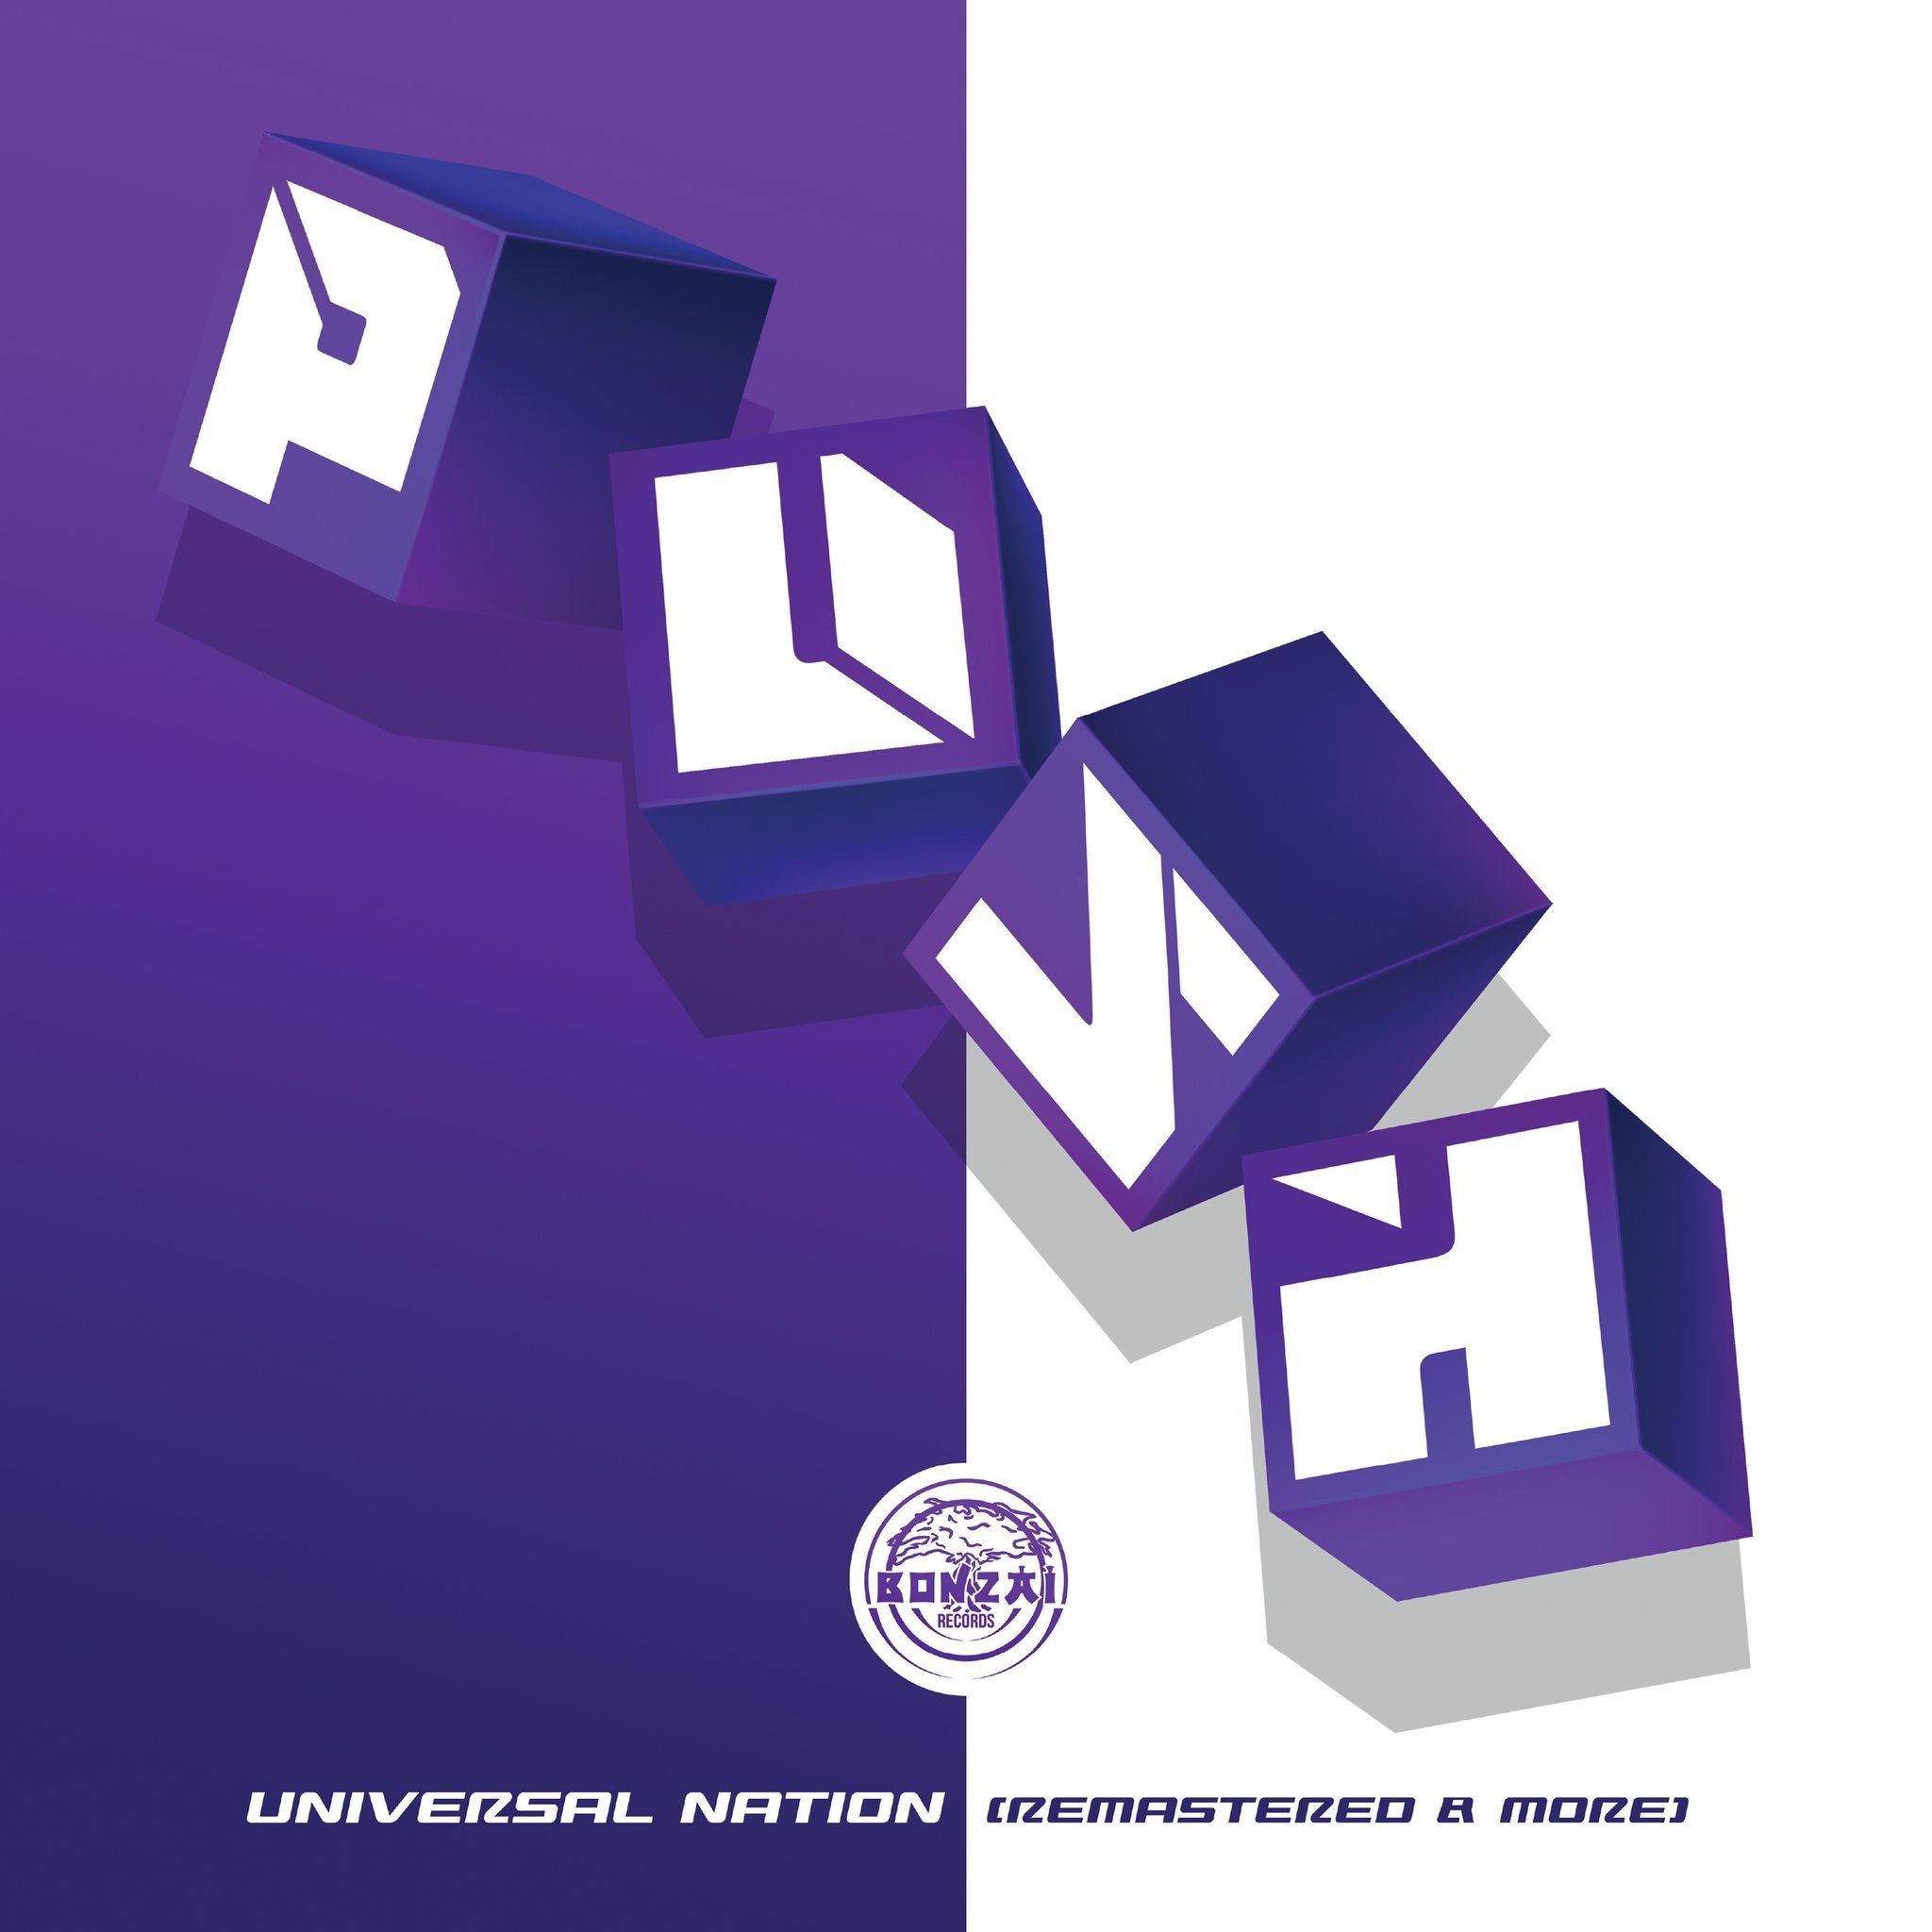 Push - Universal Nation (Remastered & More) - Purple and white vinyl - 2x12" - Bonzai Classics (MV)